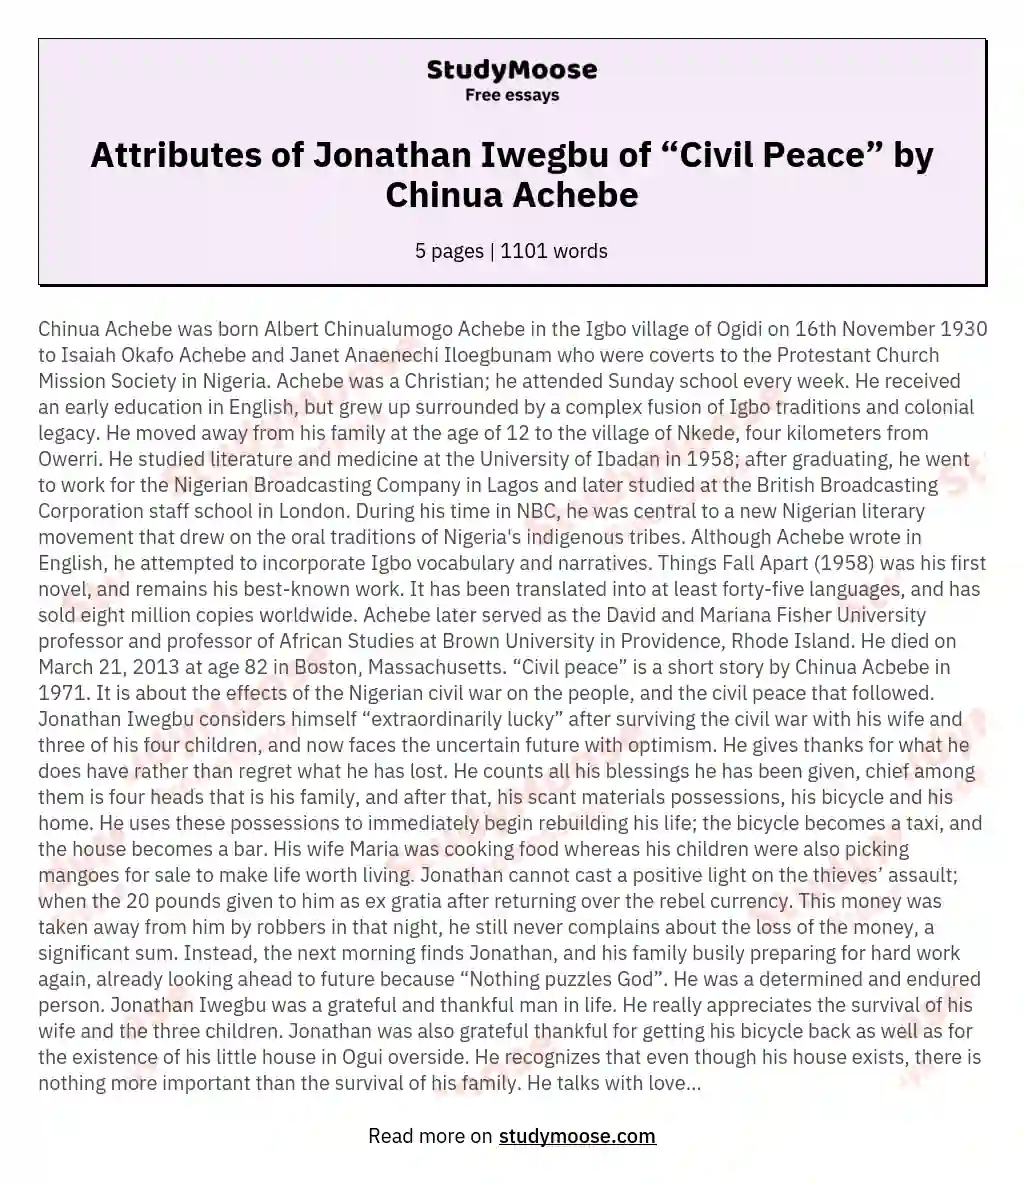 Attributes of Jonathan Iwegbu of “Civil Peace” by Chinua Achebe essay